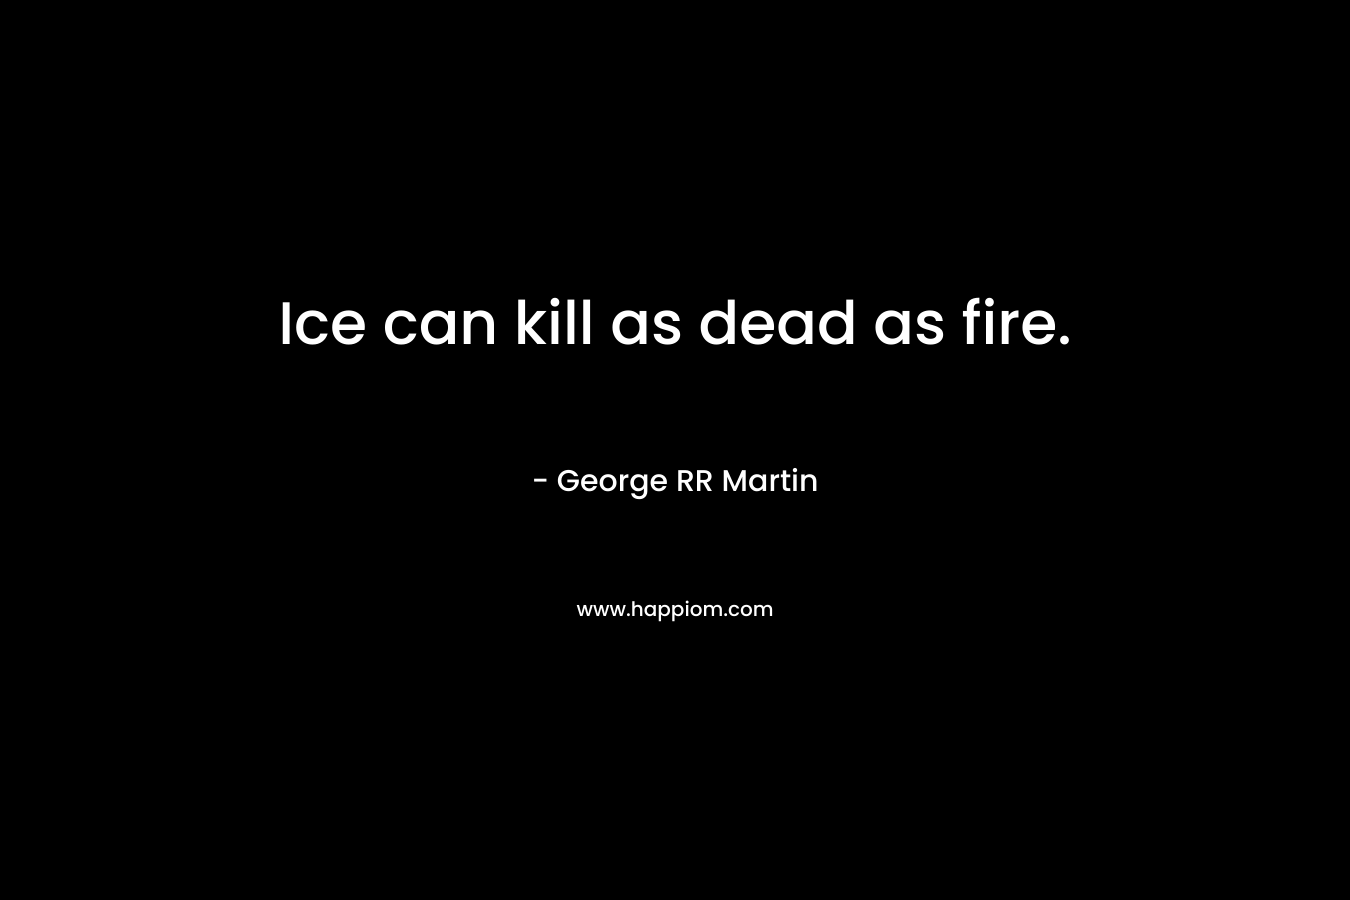 Ice can kill as dead as fire.